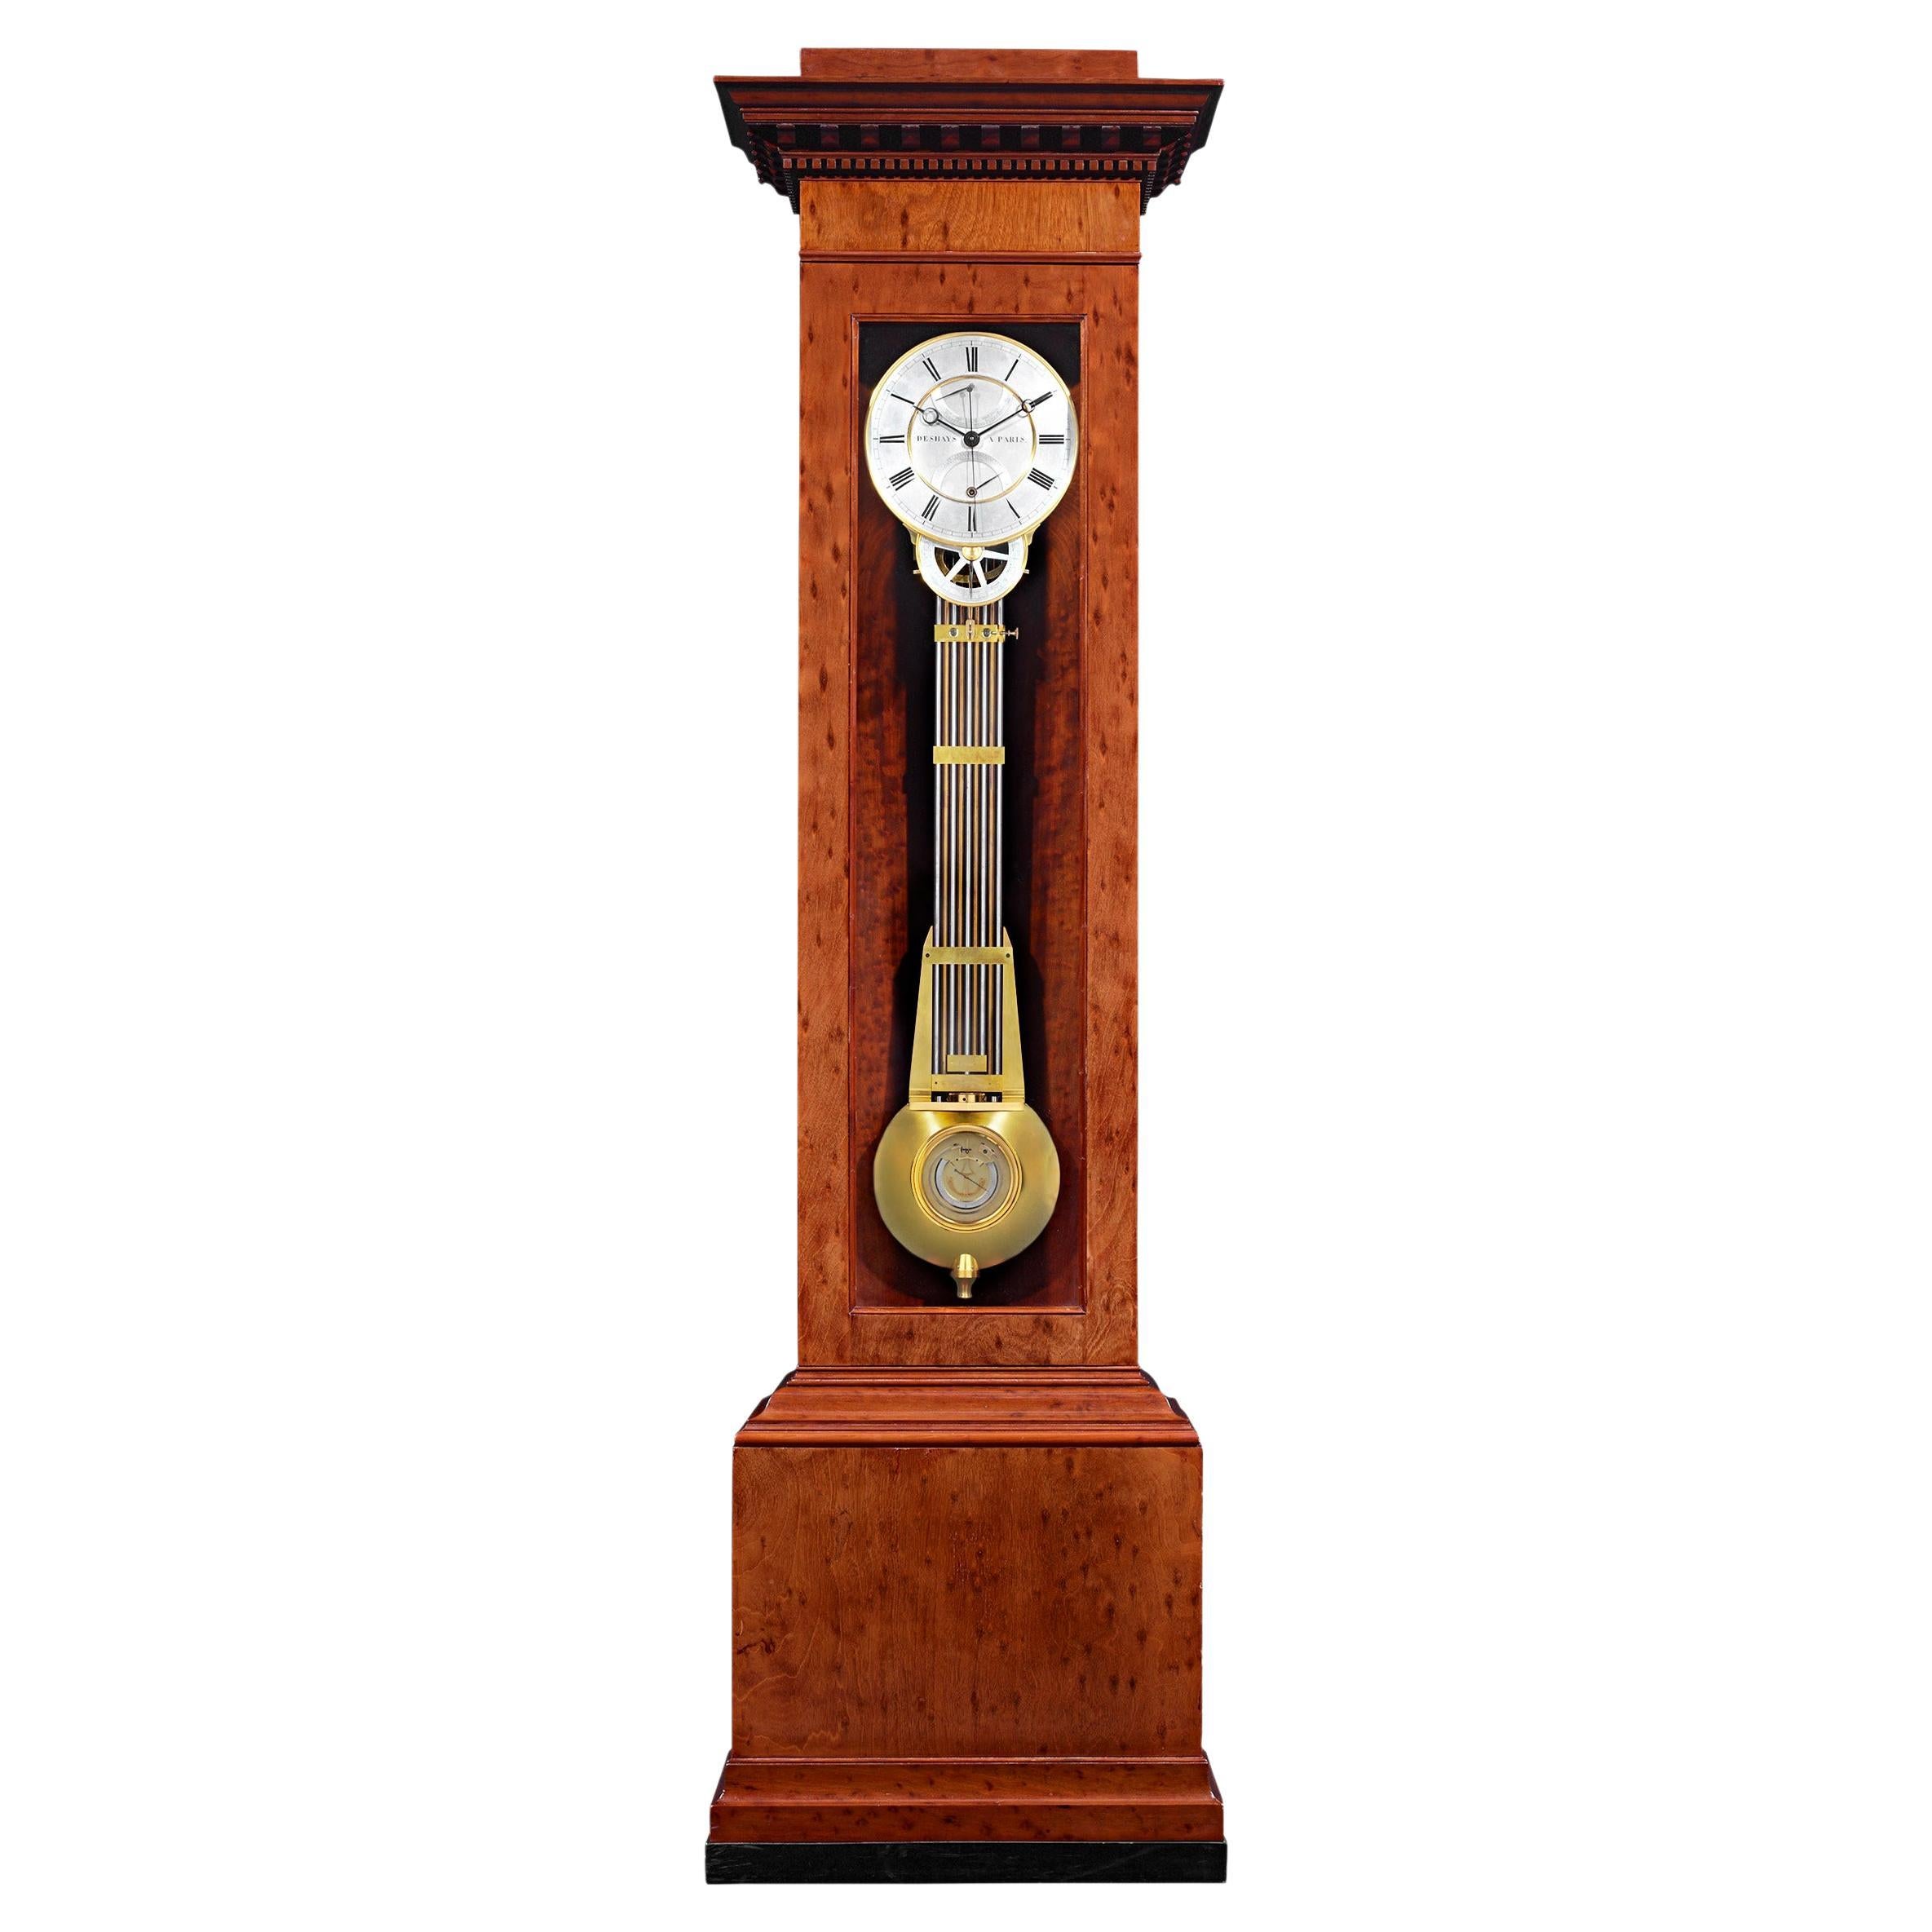 Month-Going Regulator Clock by Deshays à Paris